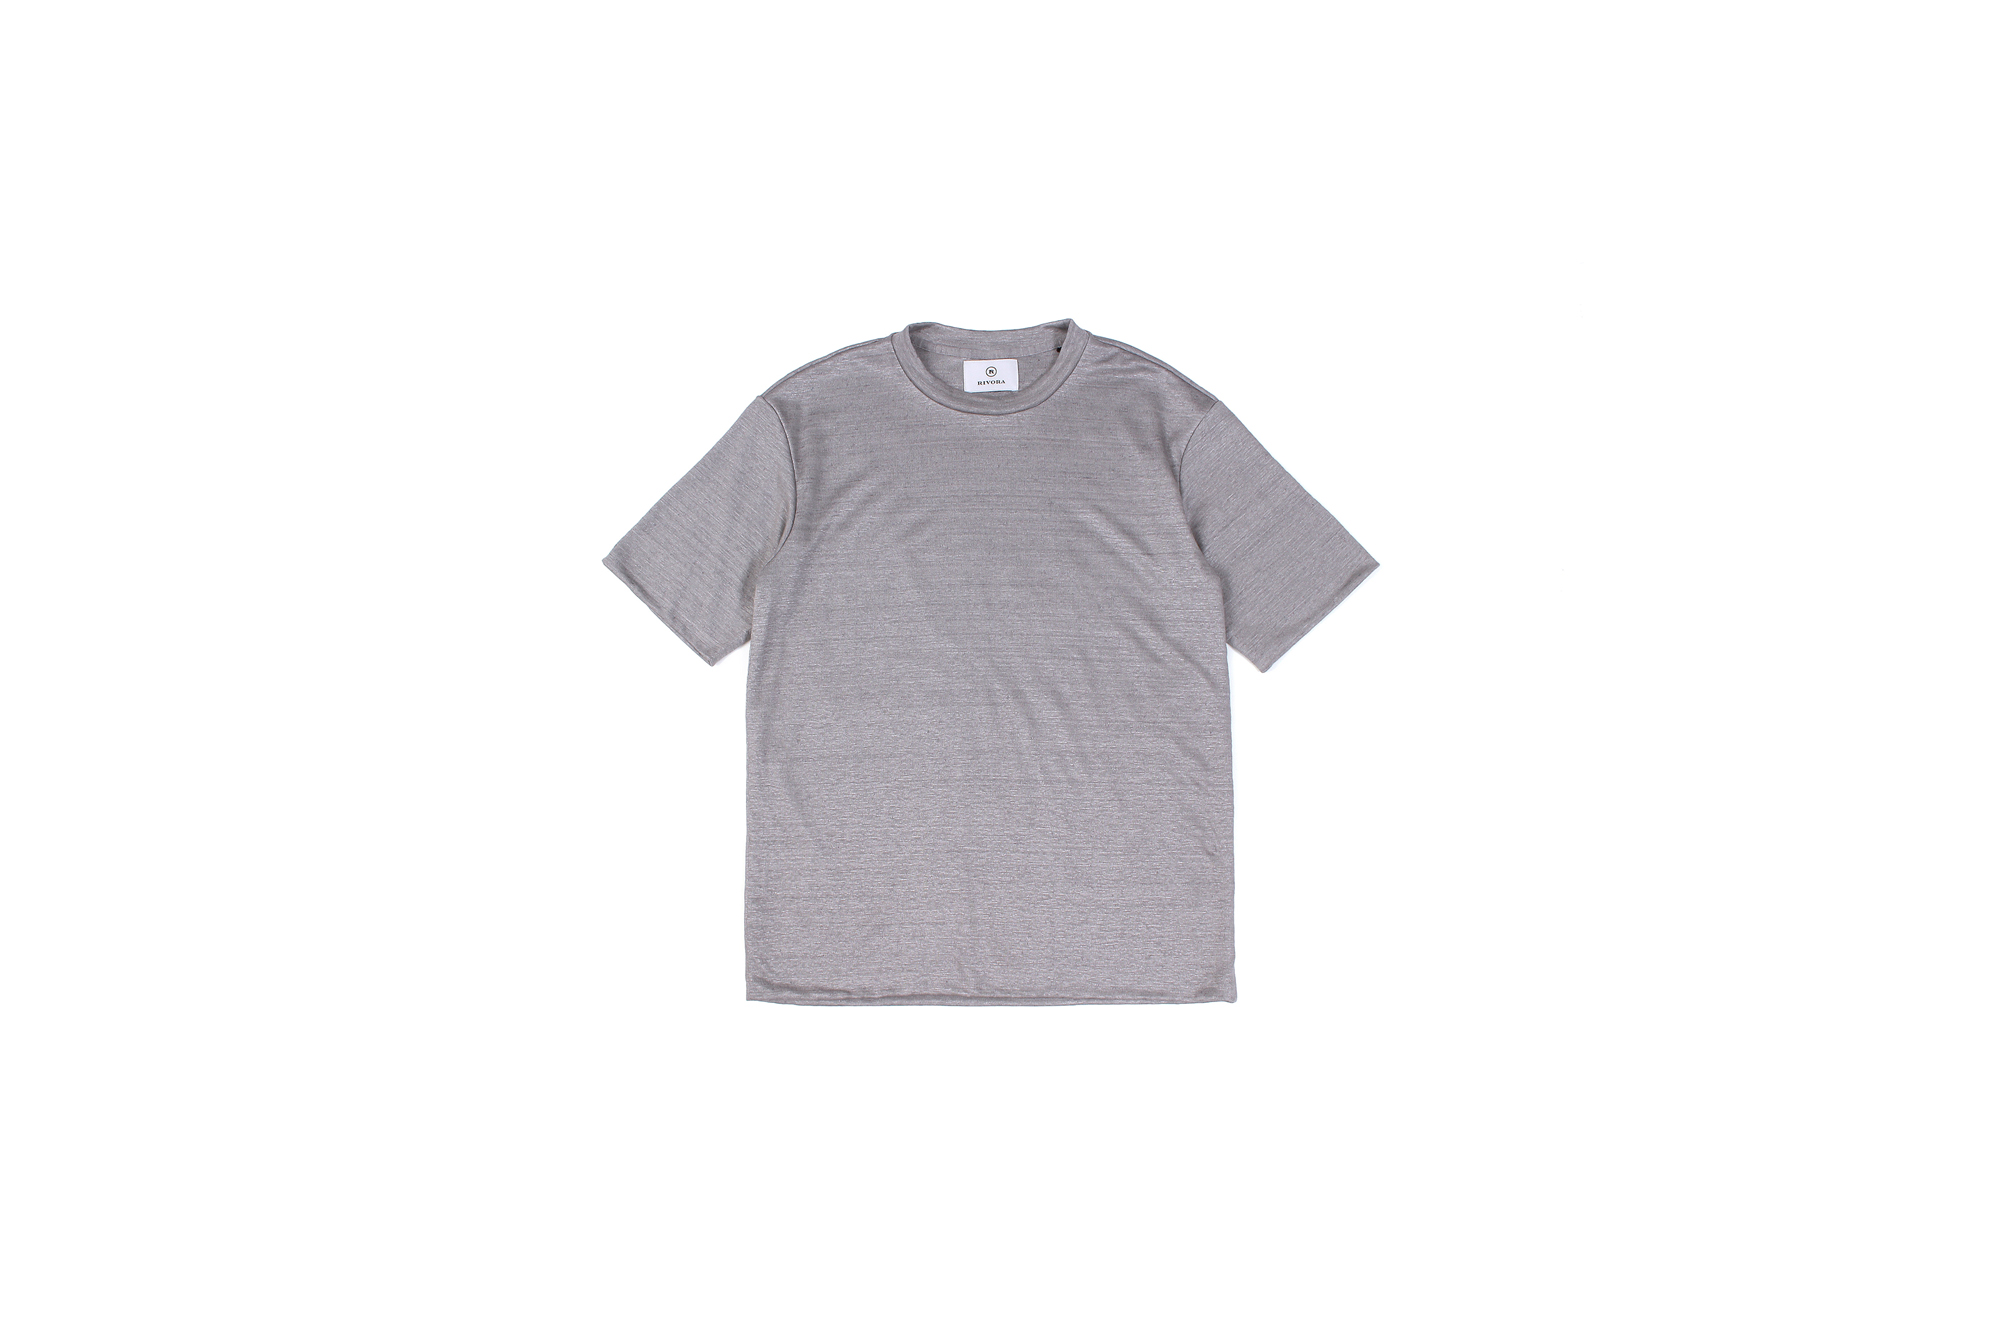 RIVORA (リヴォラ) Vintage Linen Layered T-Shirts ヴィンテージ リネン レイヤード Tシャツ GRAY (グレー・020) MADE IN JAPAN (日本製) 2021 春夏新作 【入荷しました】【フリー分発売開始】愛知 名古屋 Alto e Diritto altoediritto アルトエデリット 半袖TEE